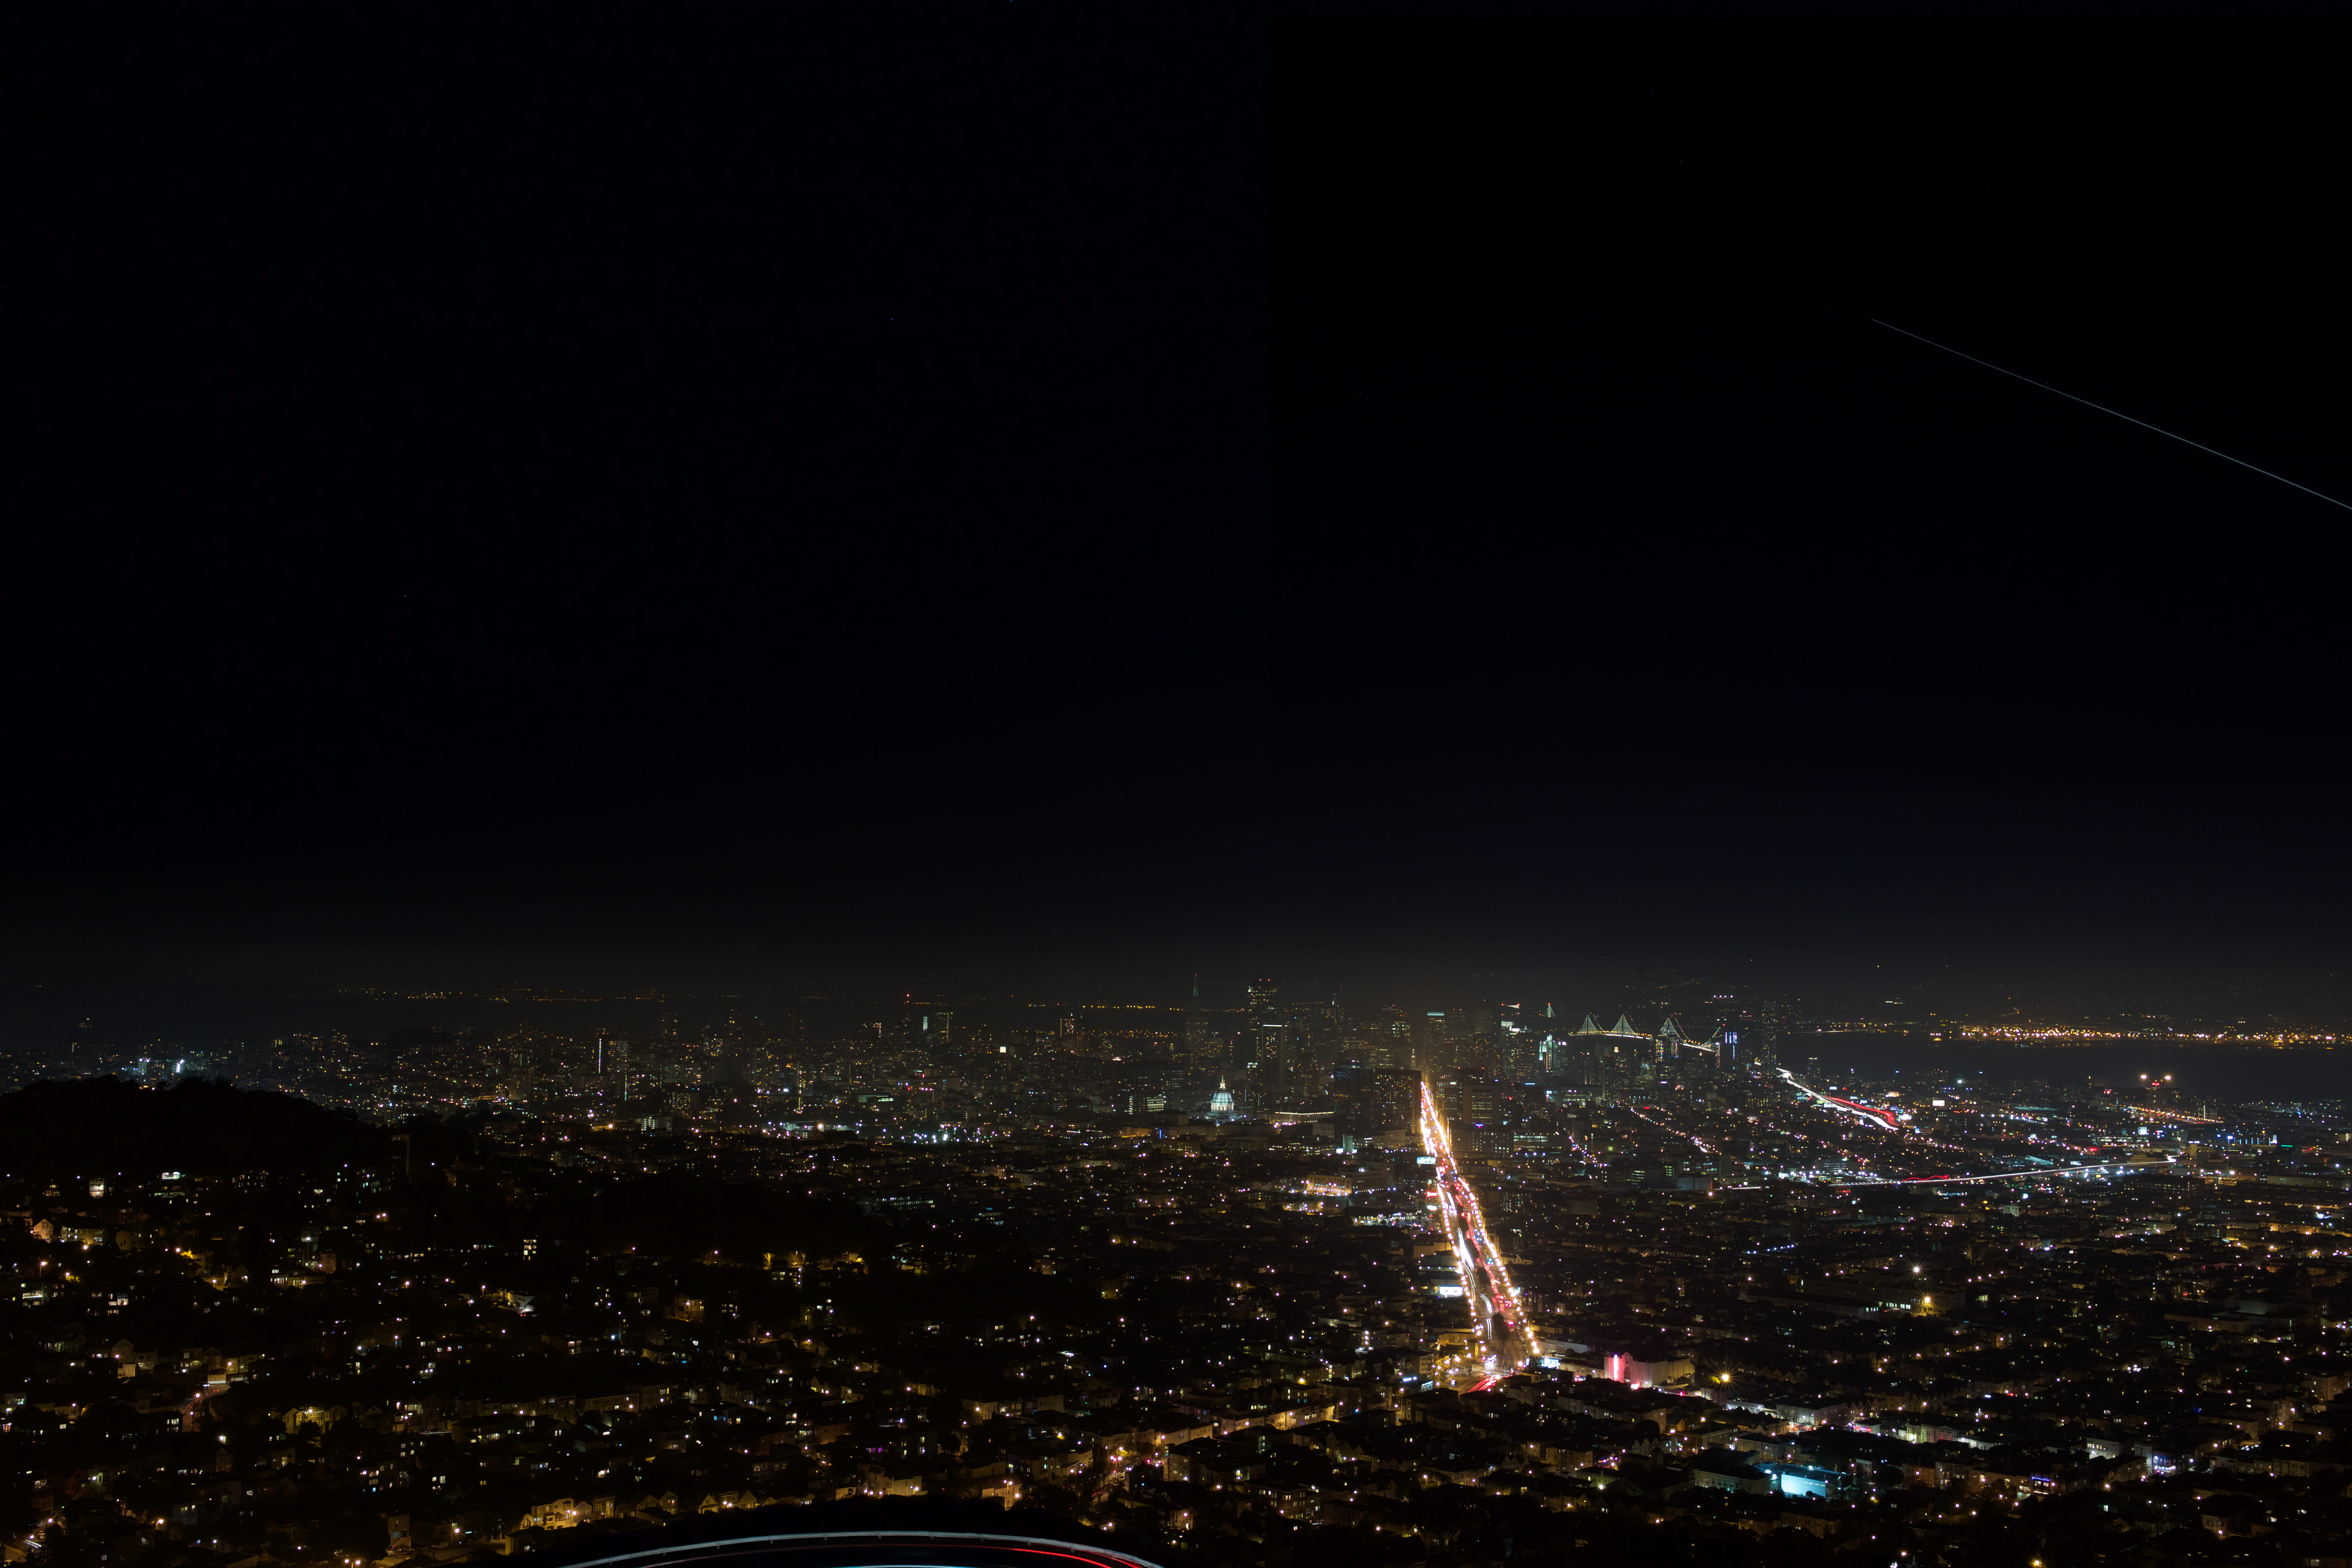 Lighted City Skyline at Night, buildings, city lights, dark, high angle shot